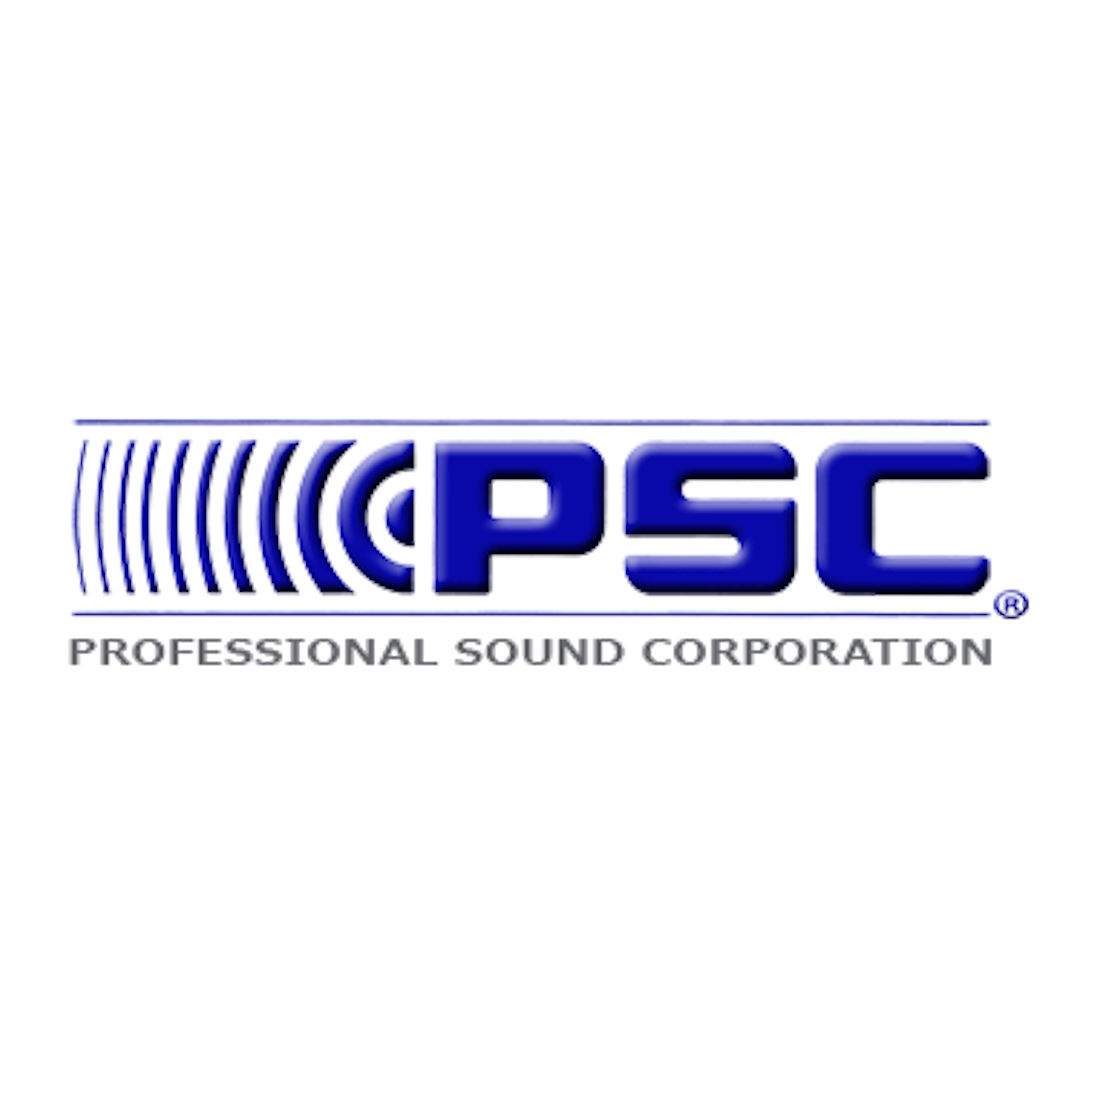 Professional Sound Corporation